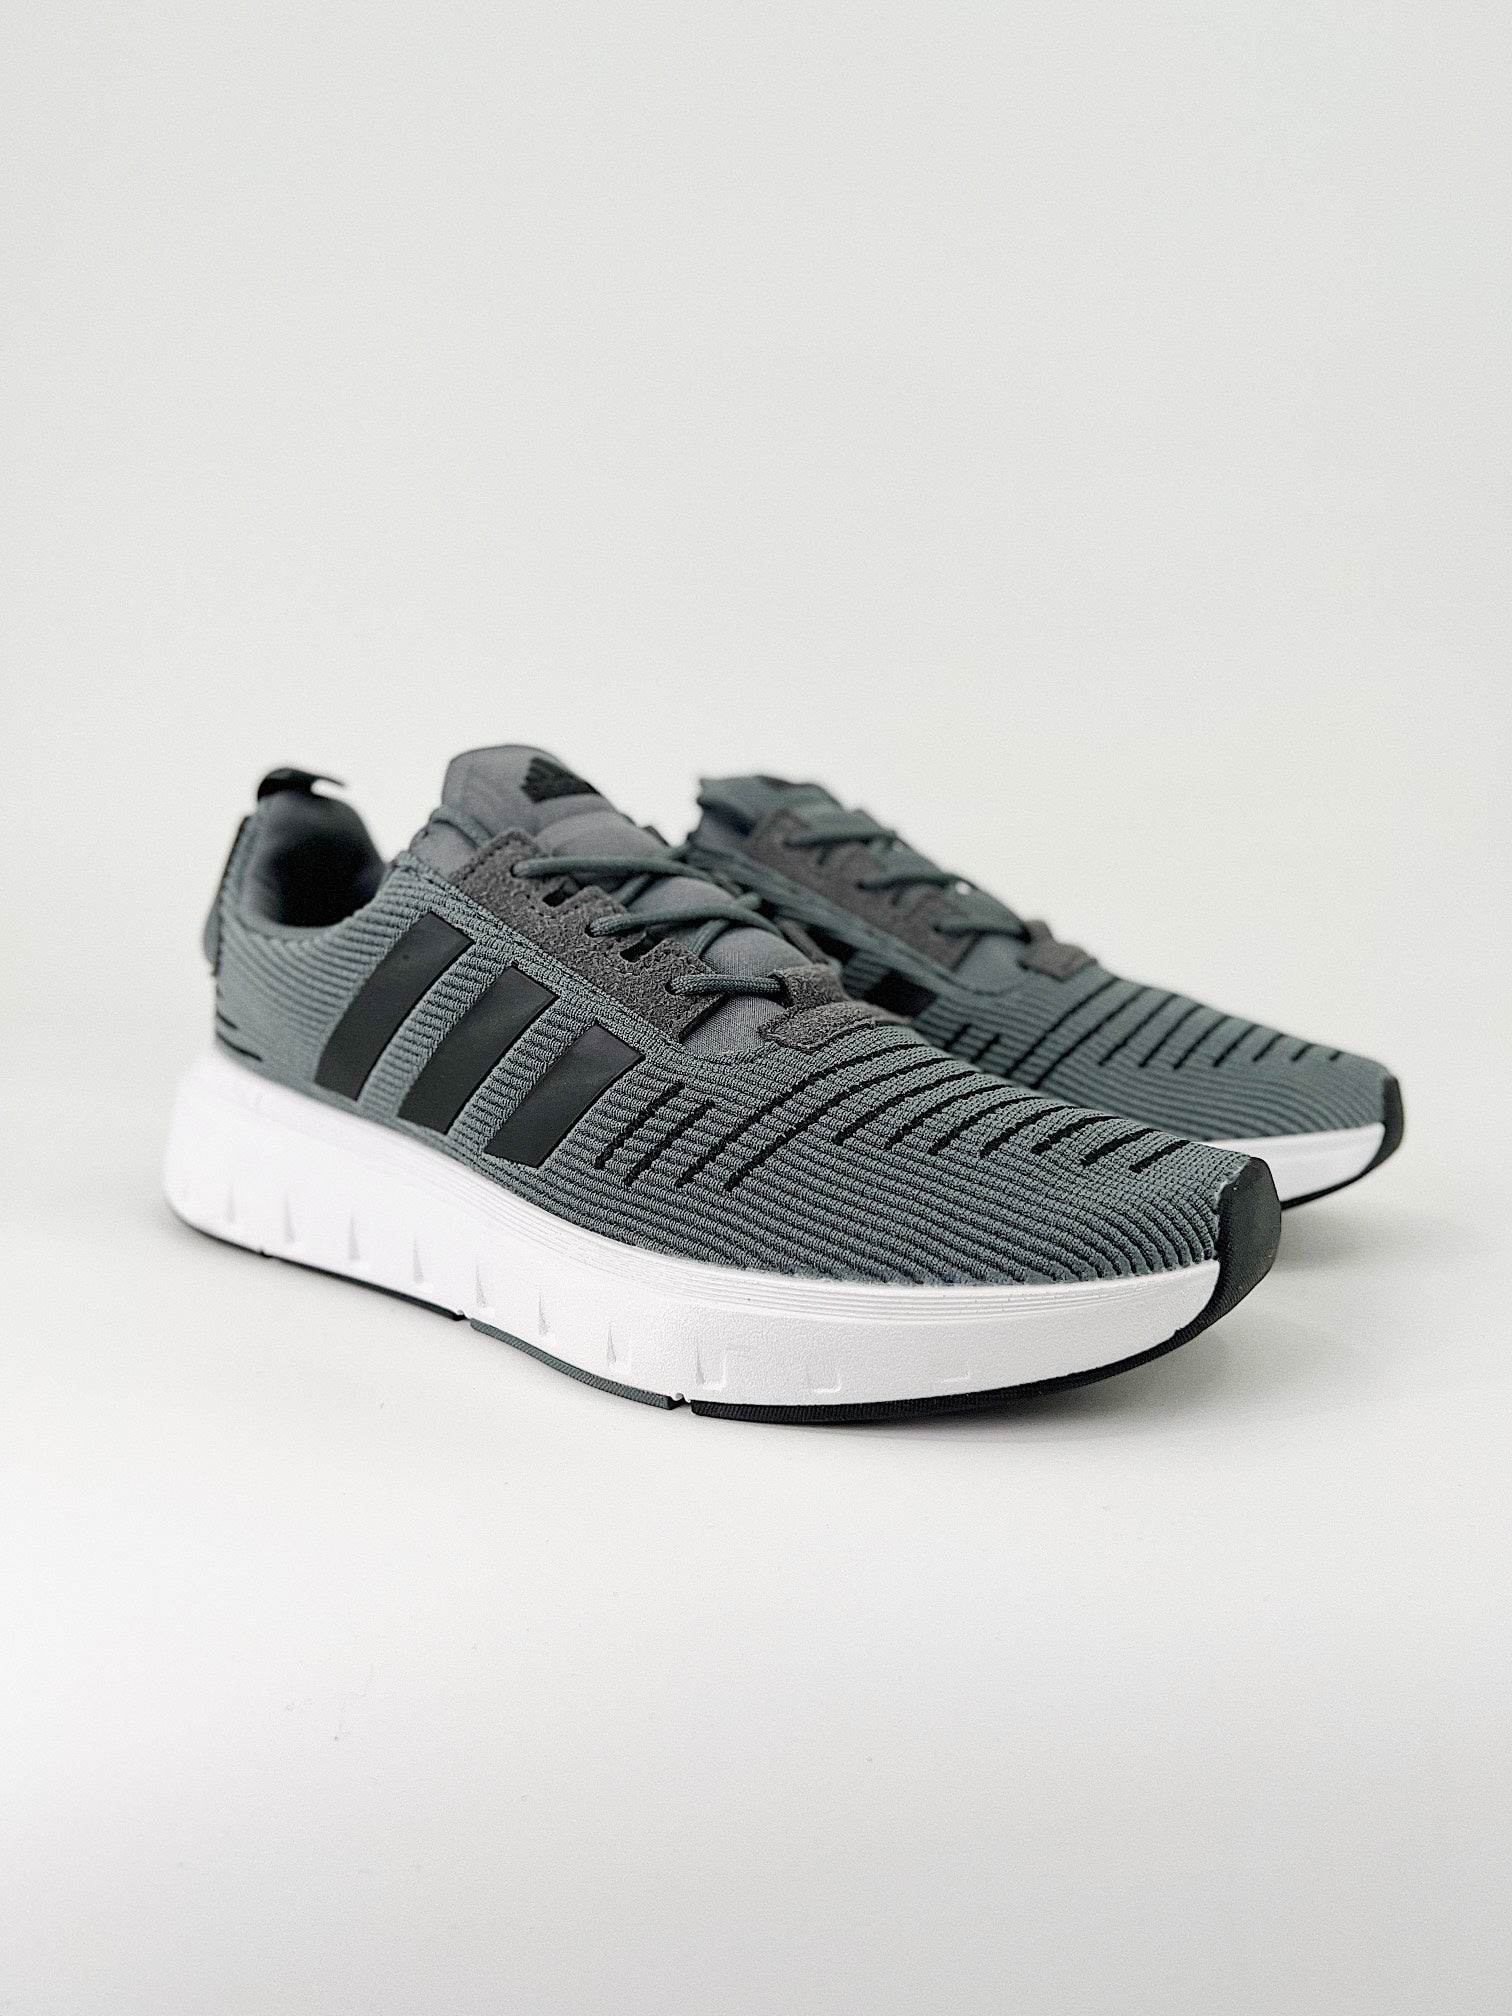 Adidas RUN swift grey and black